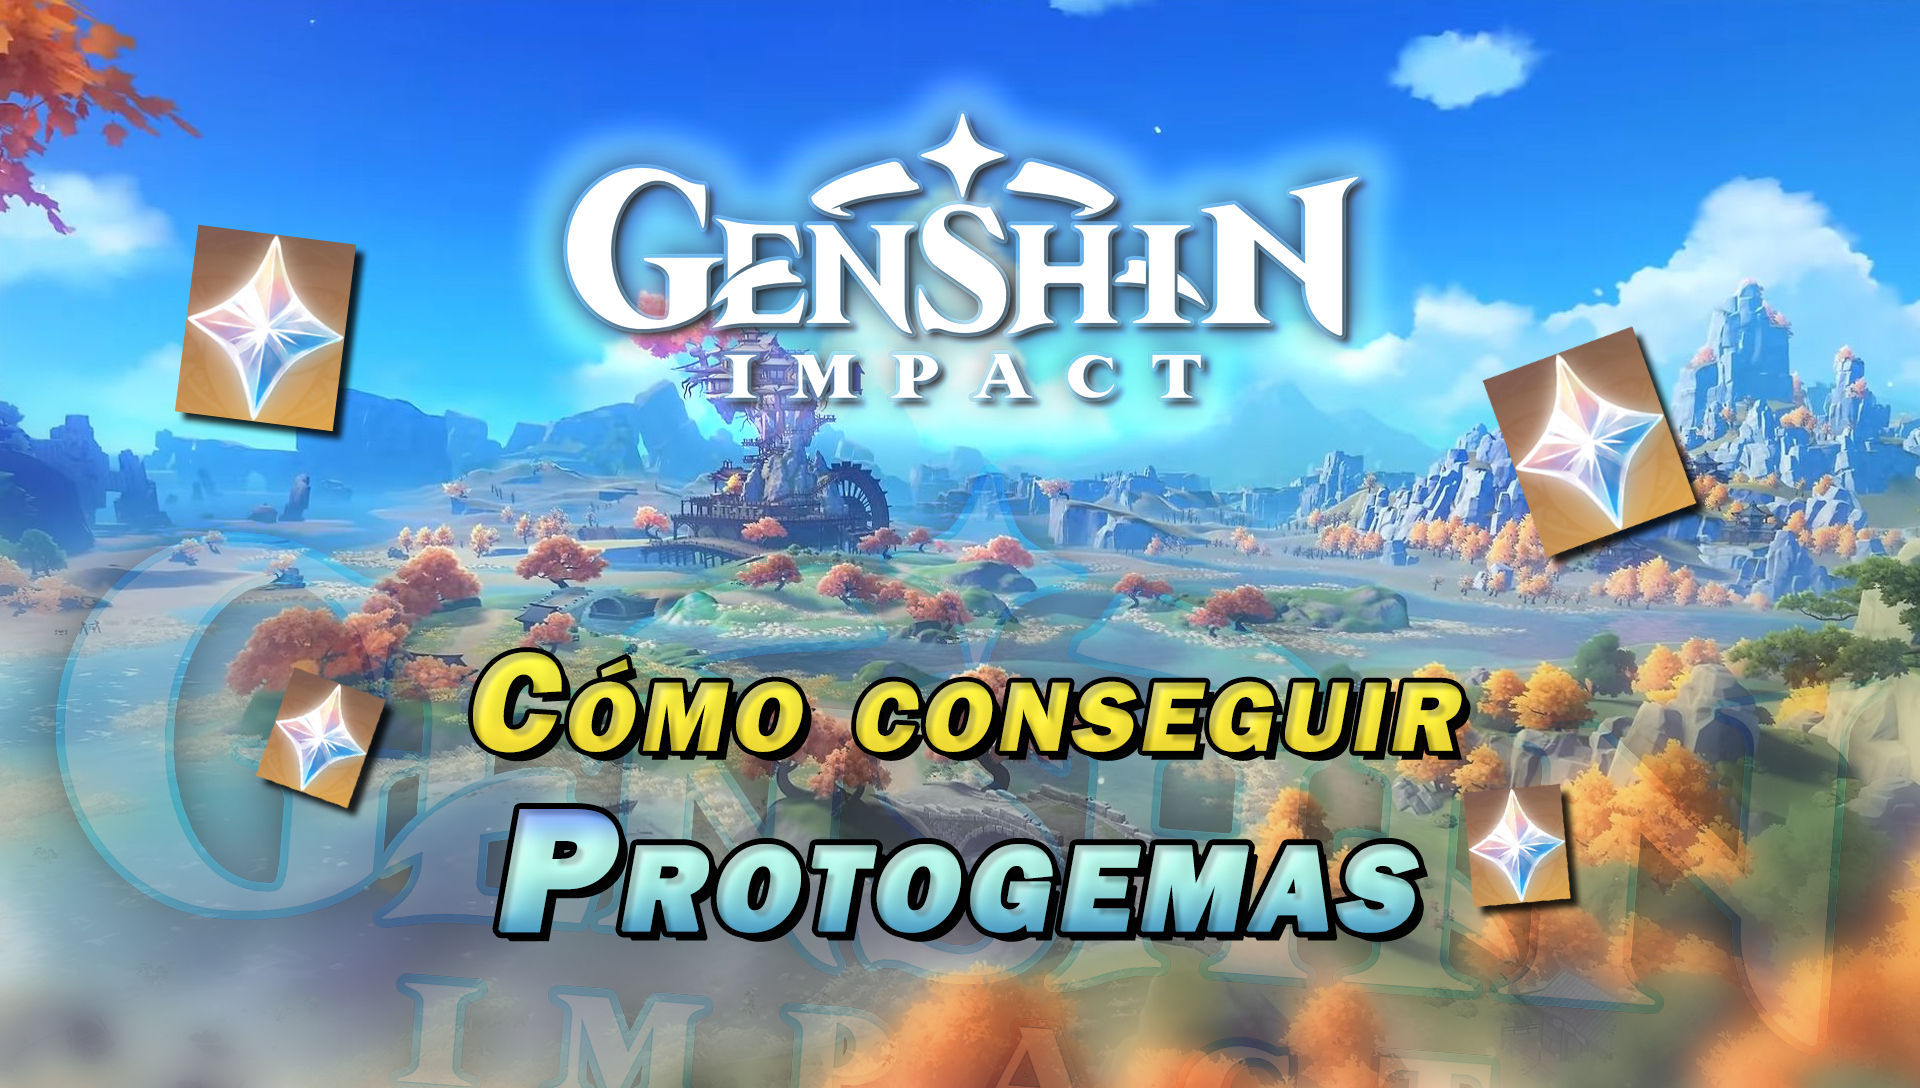 Códigos gratis de Genshin Impact para conseguir protogemas en